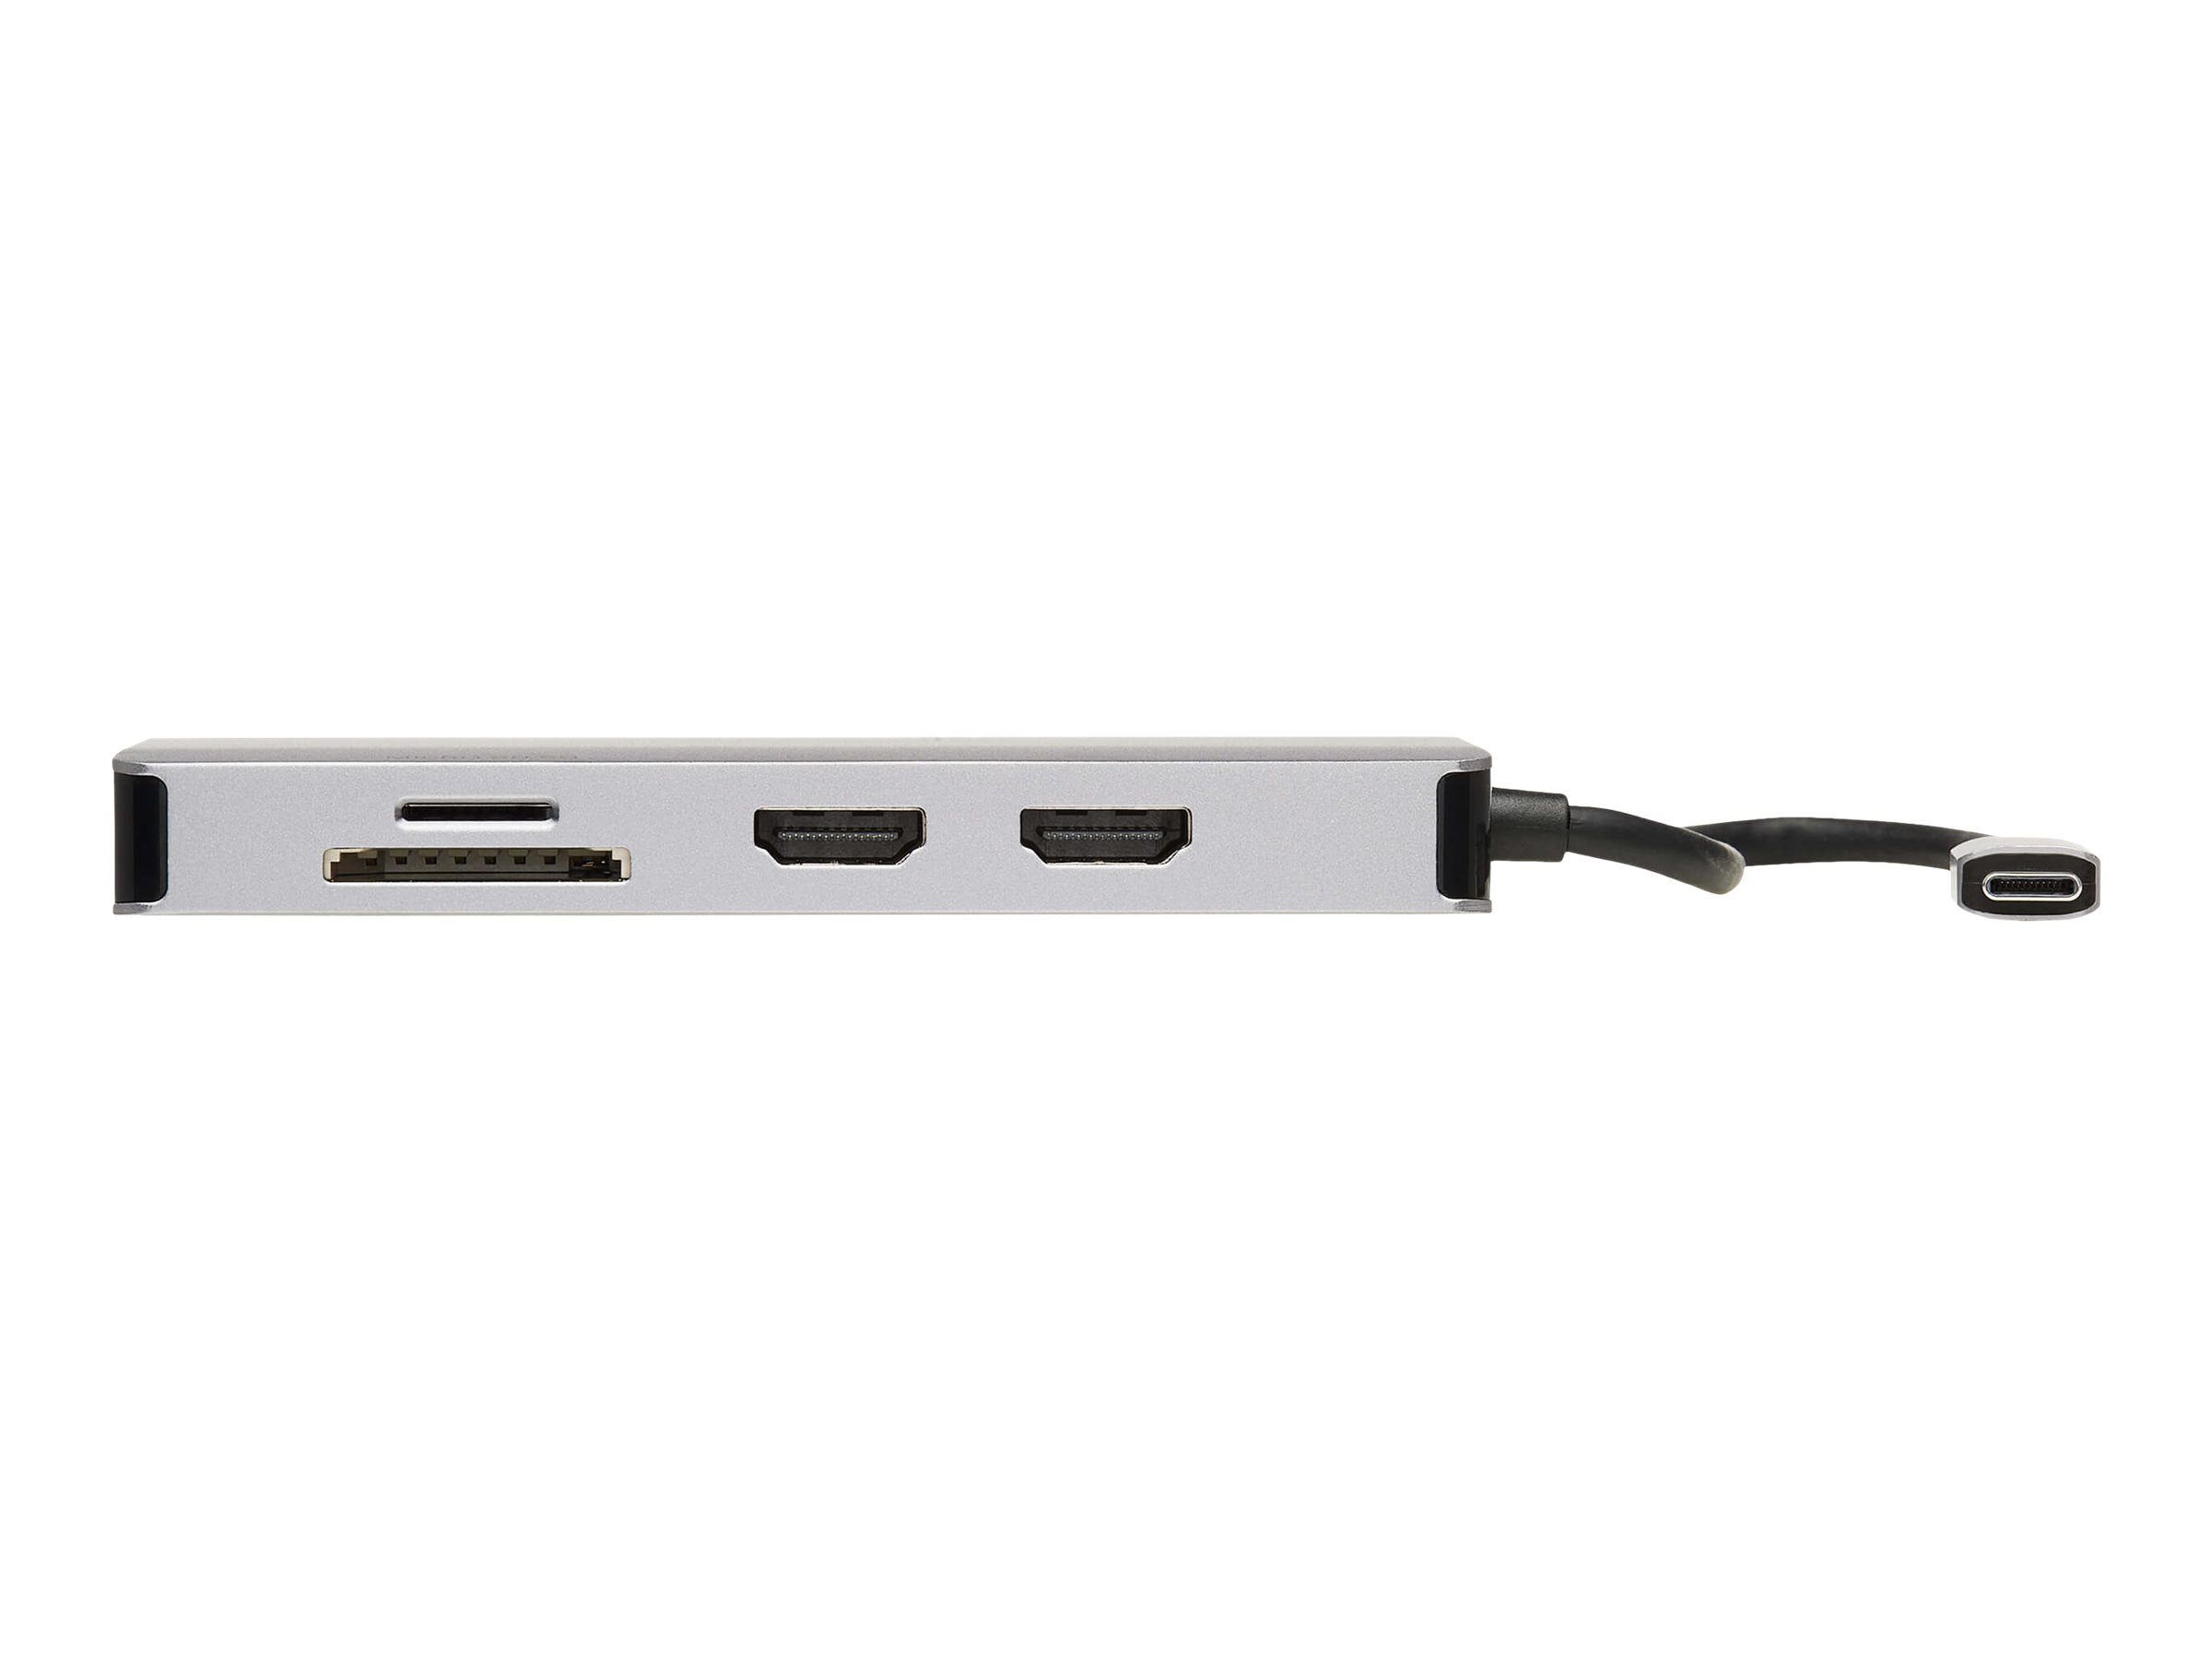 Tripp Lite USB-C Dock, Dual Display - 4K 60 Hz HDMI, USB 3.2 Gen 1, USB-A Hub, GbE, Memory Card, 100W PD Charging, Gray - Station d'accueil - USB-C - 2 x HDMI - 1GbE - U442-DOCK8G-GG - Stations d'accueil pour ordinateur portable